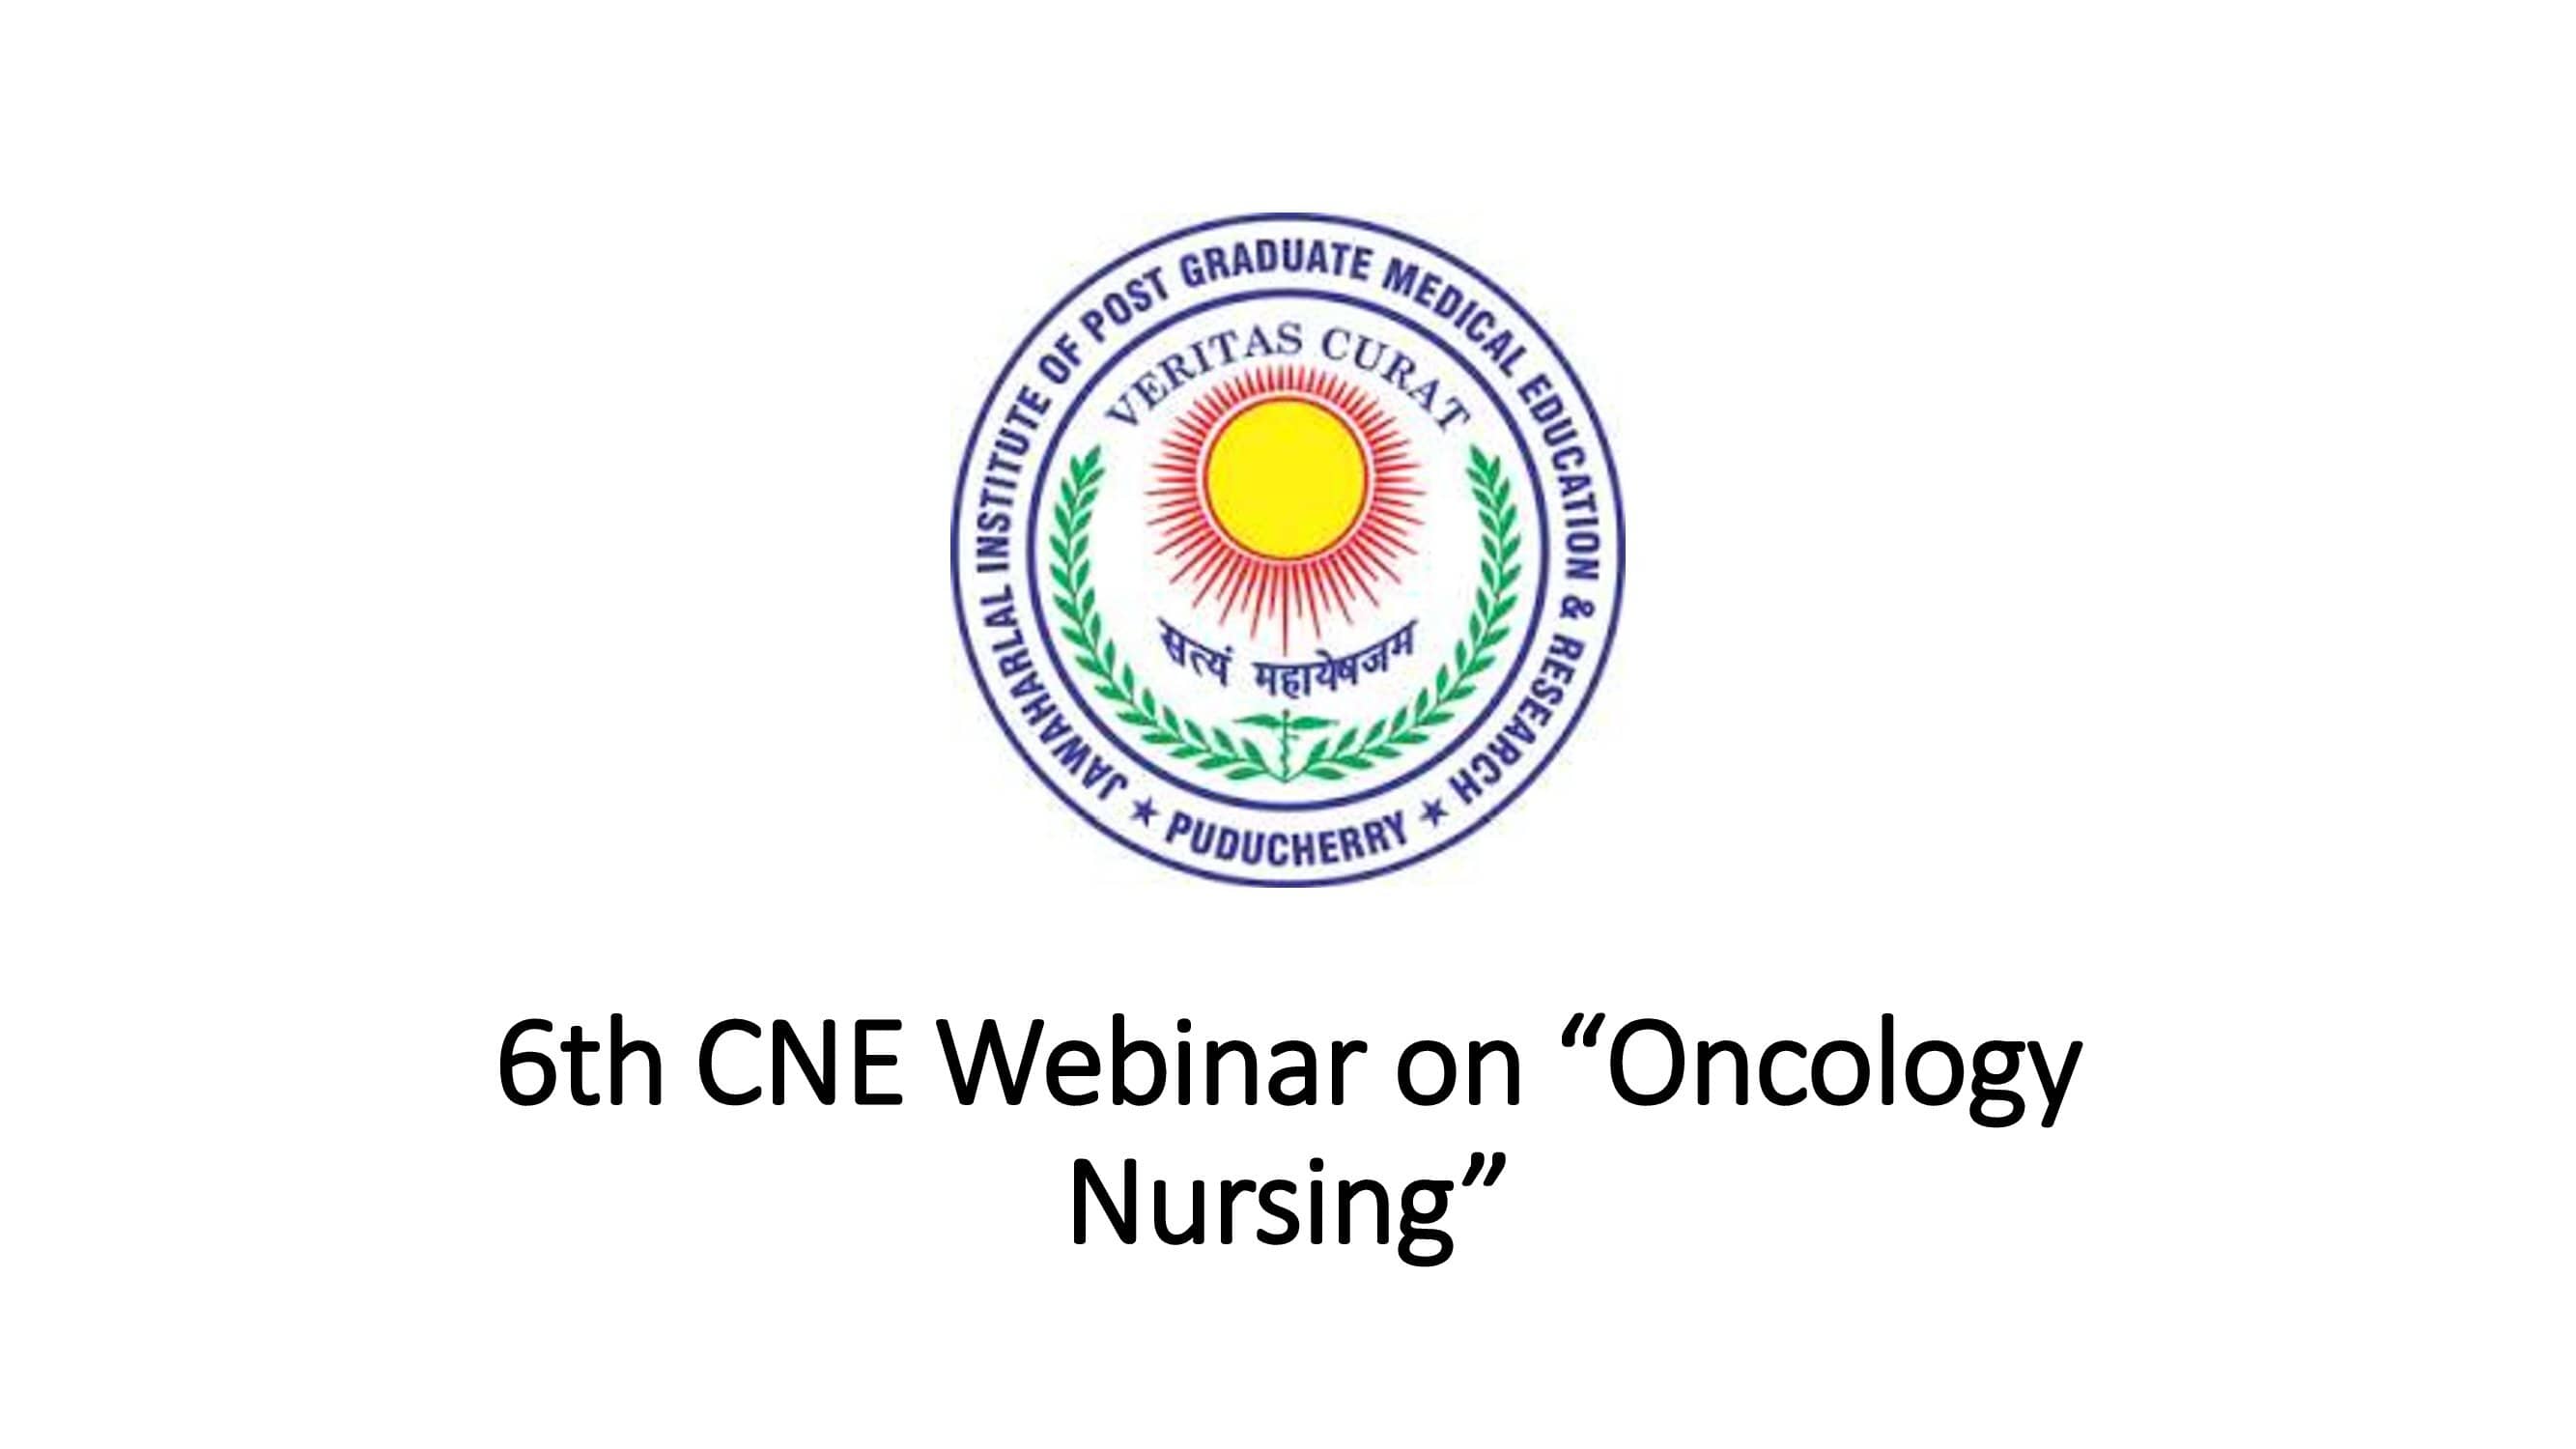 6th CNE Webinar on “Oncology Nursing”